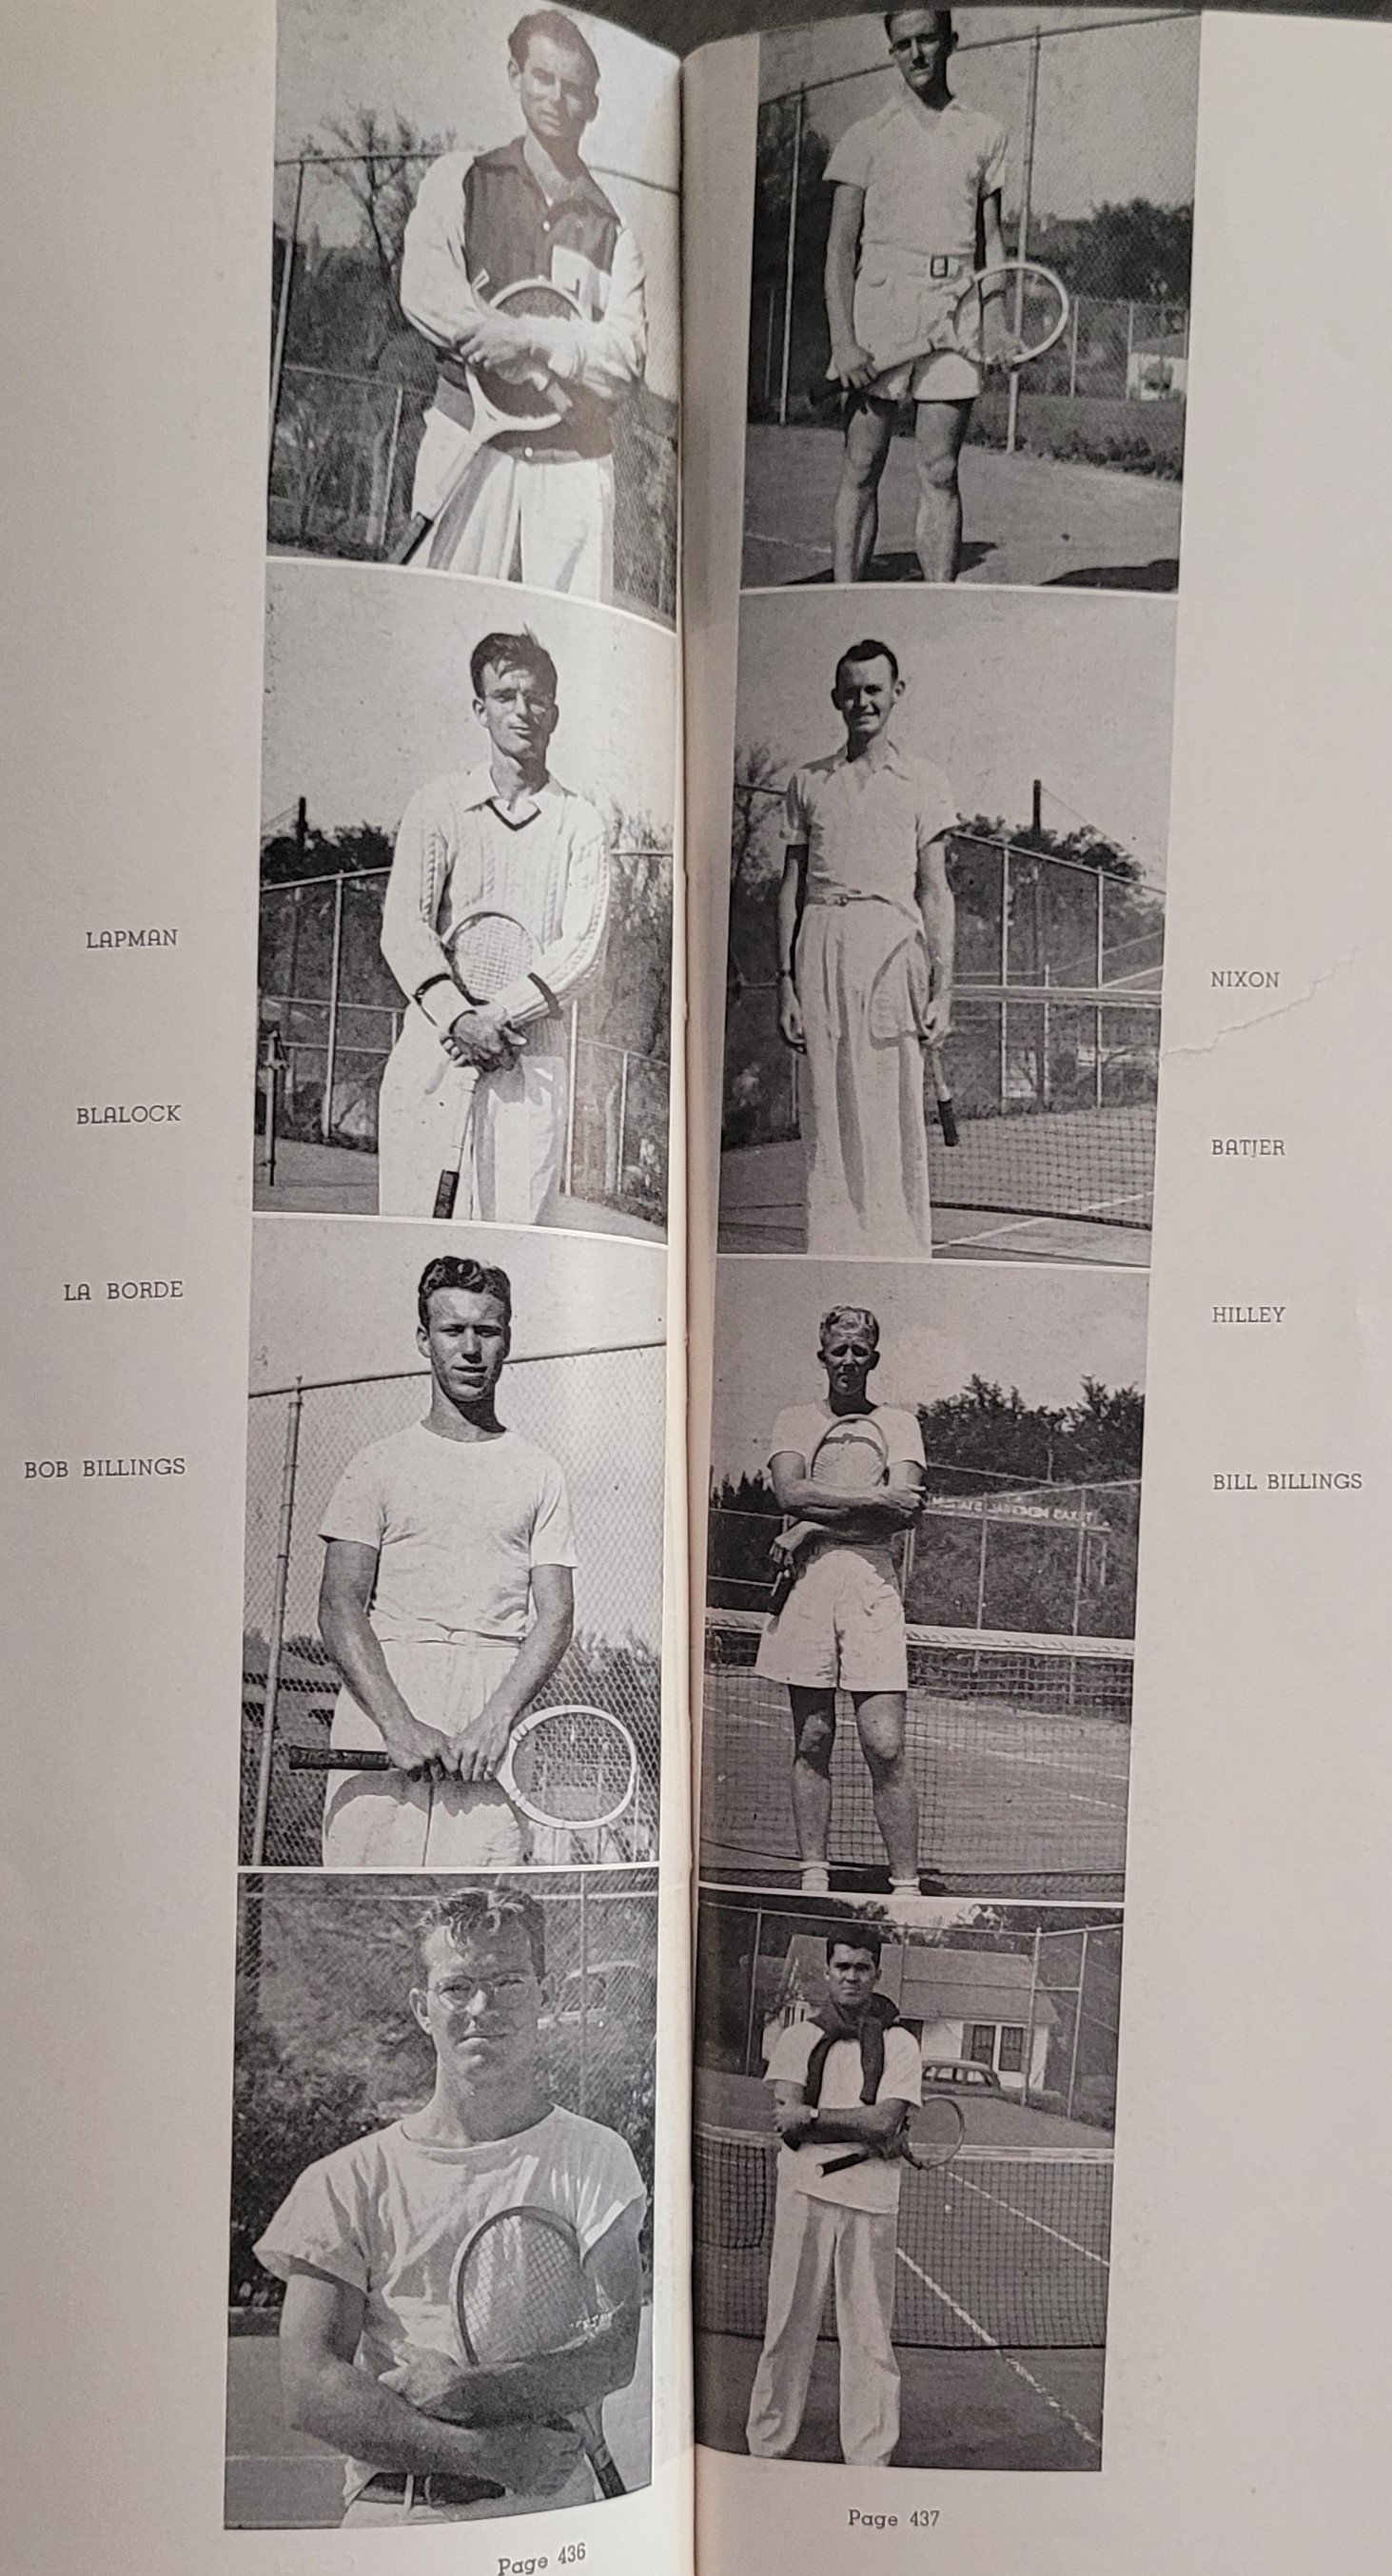  1940-1941 tennis   Lapman, Blalock, La Borde,  Bpb Billings,  Bill Billings, Nixon, Batjer, Hilley 